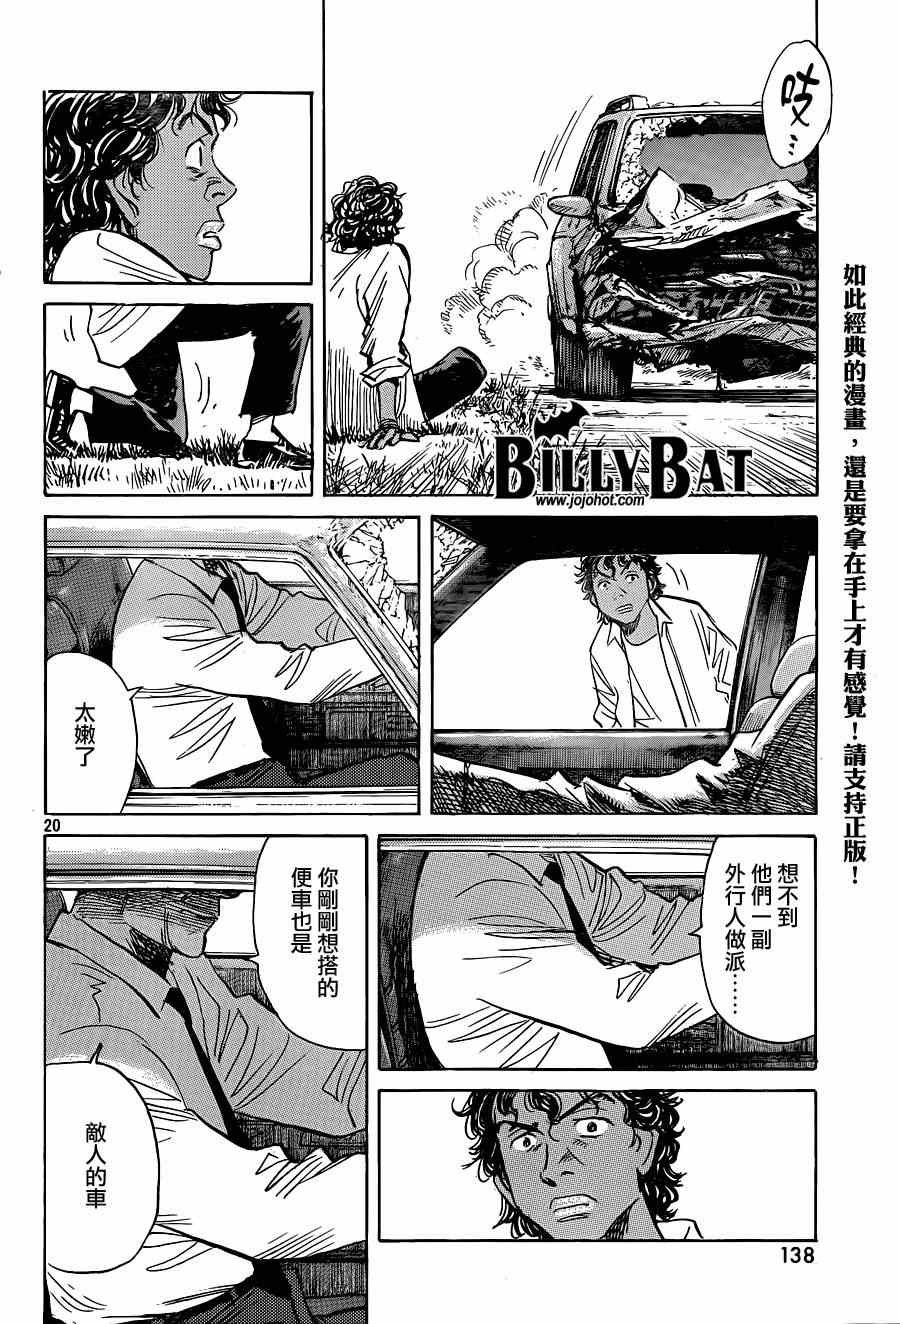 《BILLY BAT》漫画 蝙蝠比利 124集